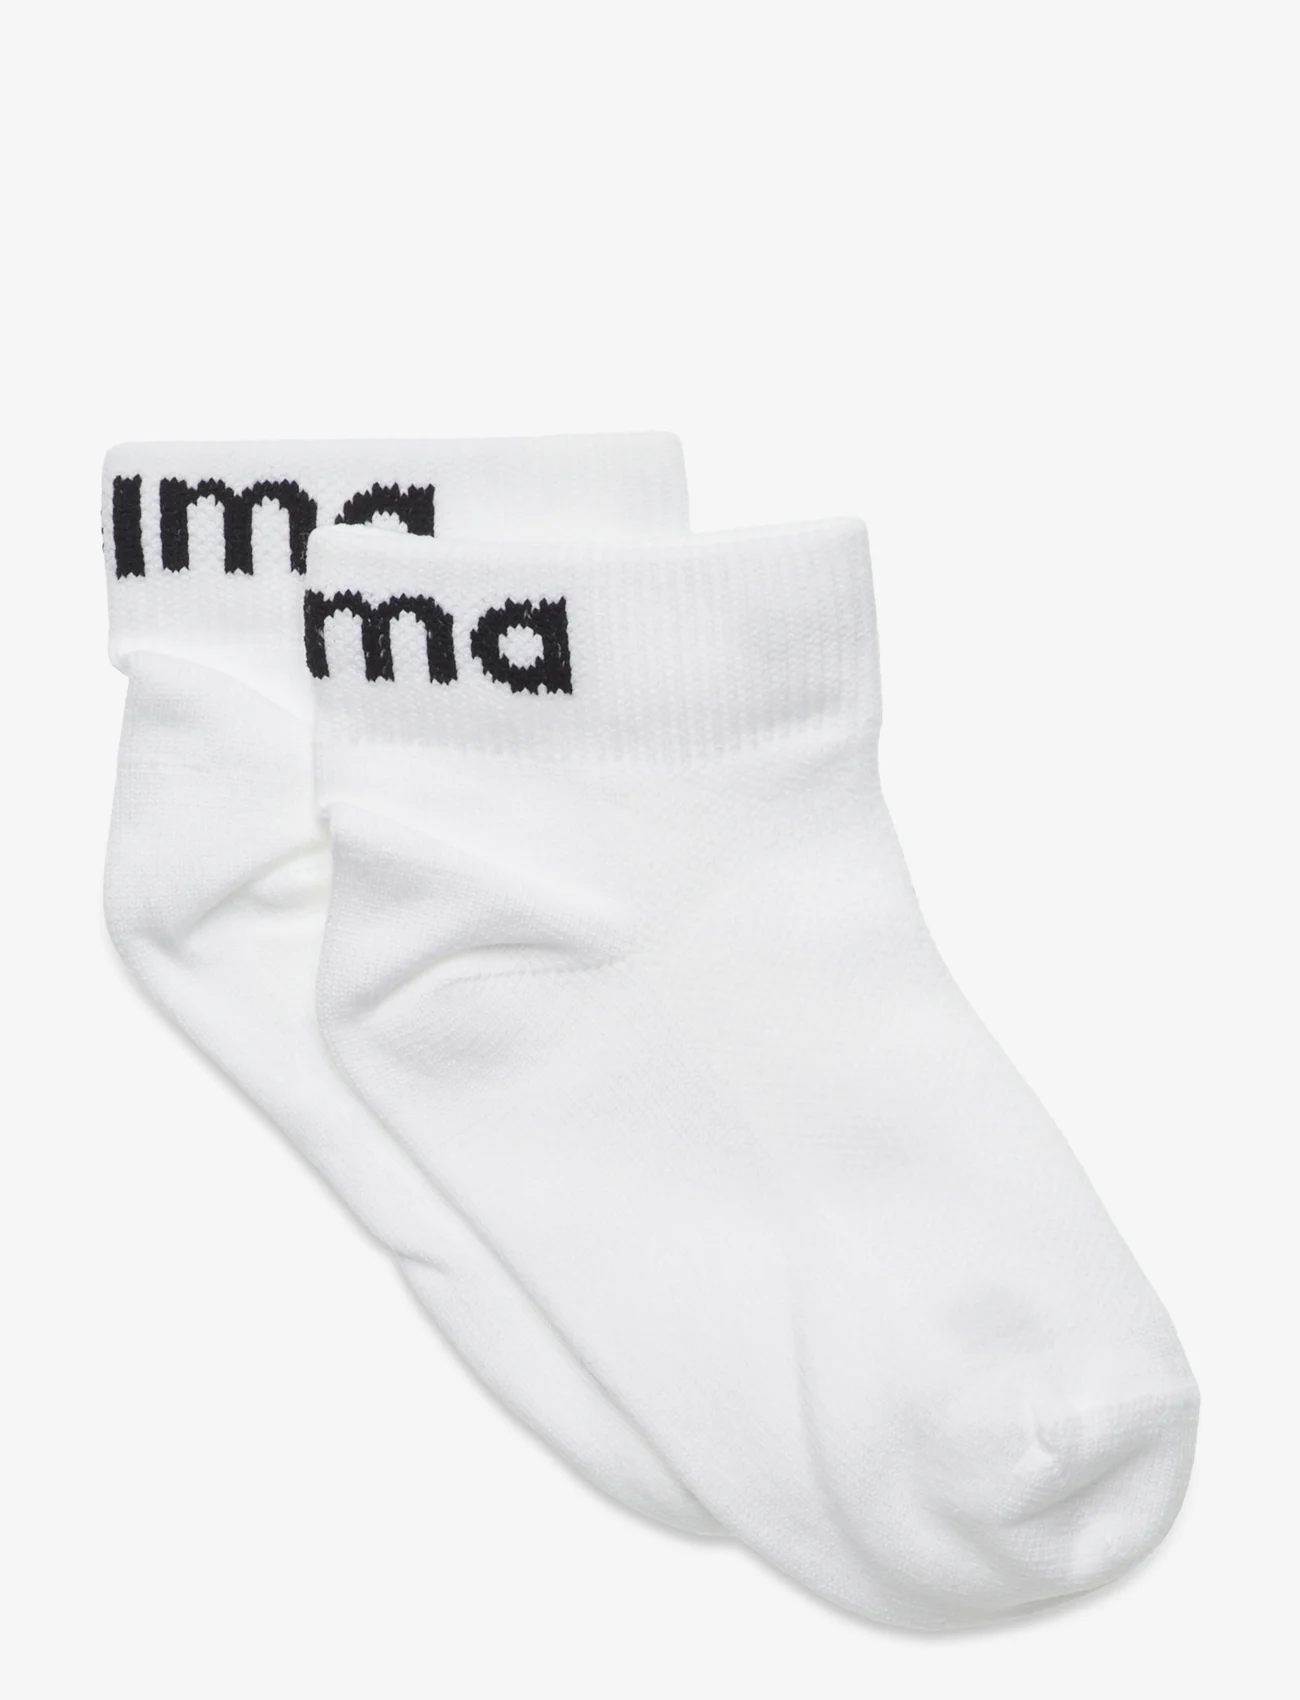 Reima - Socks, Vauhtiin - socks - white - 0